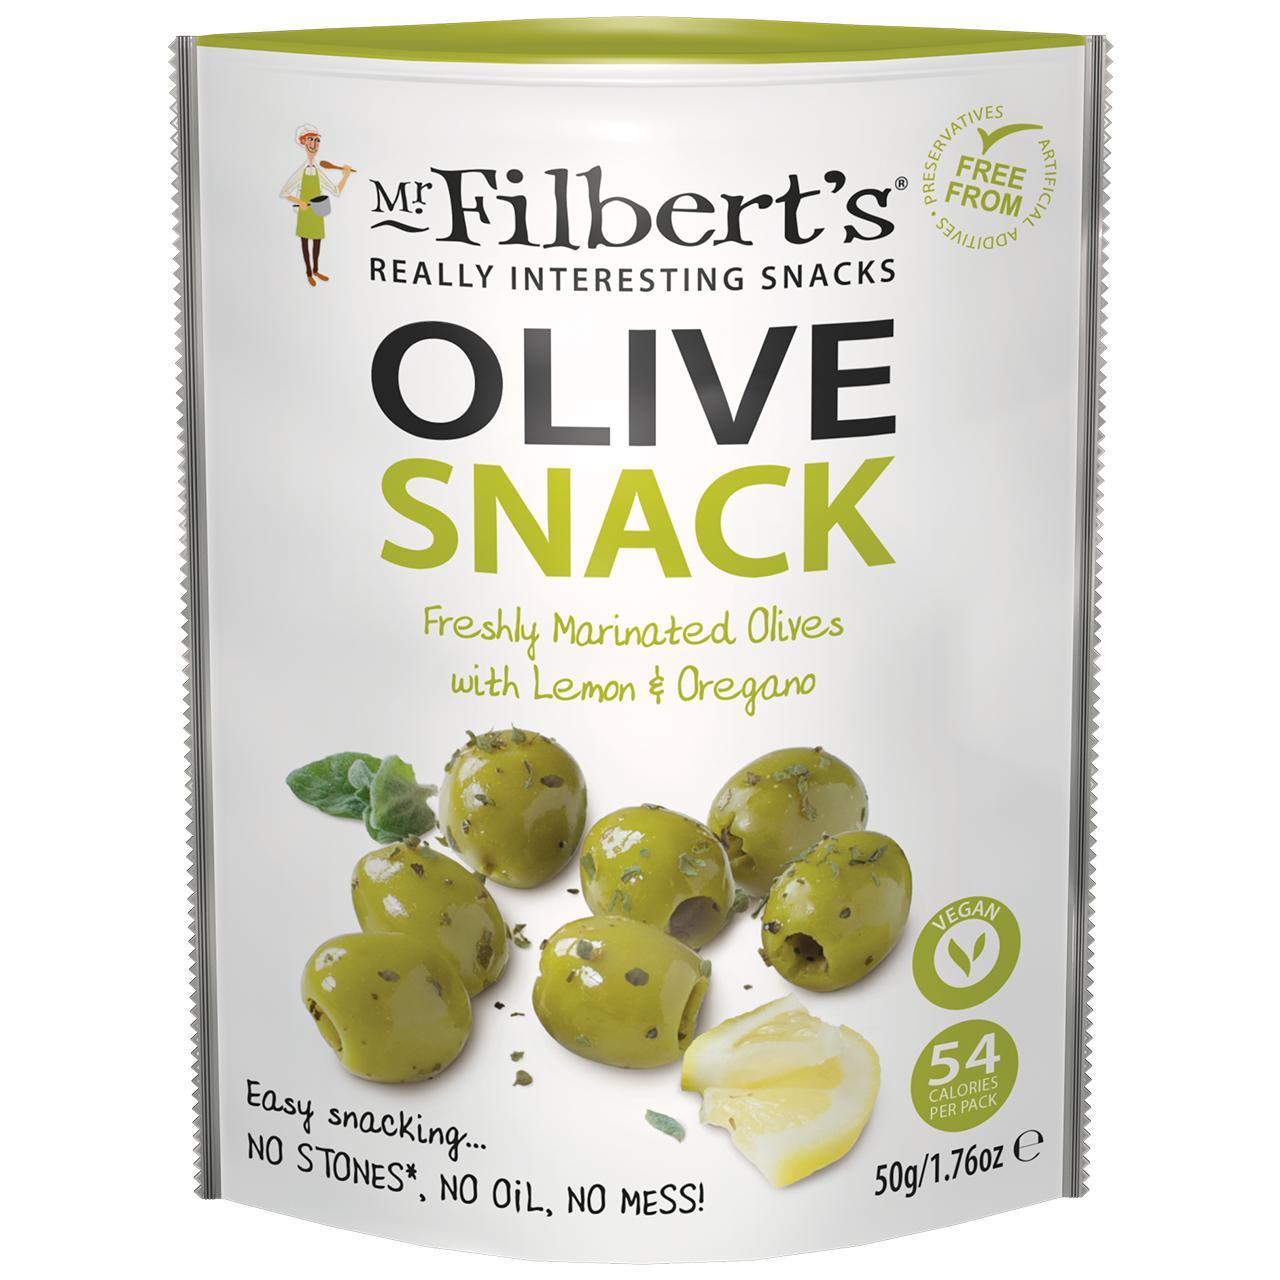 Mr Filberts Olive Snacks Green Olives with Lemon & Oregano